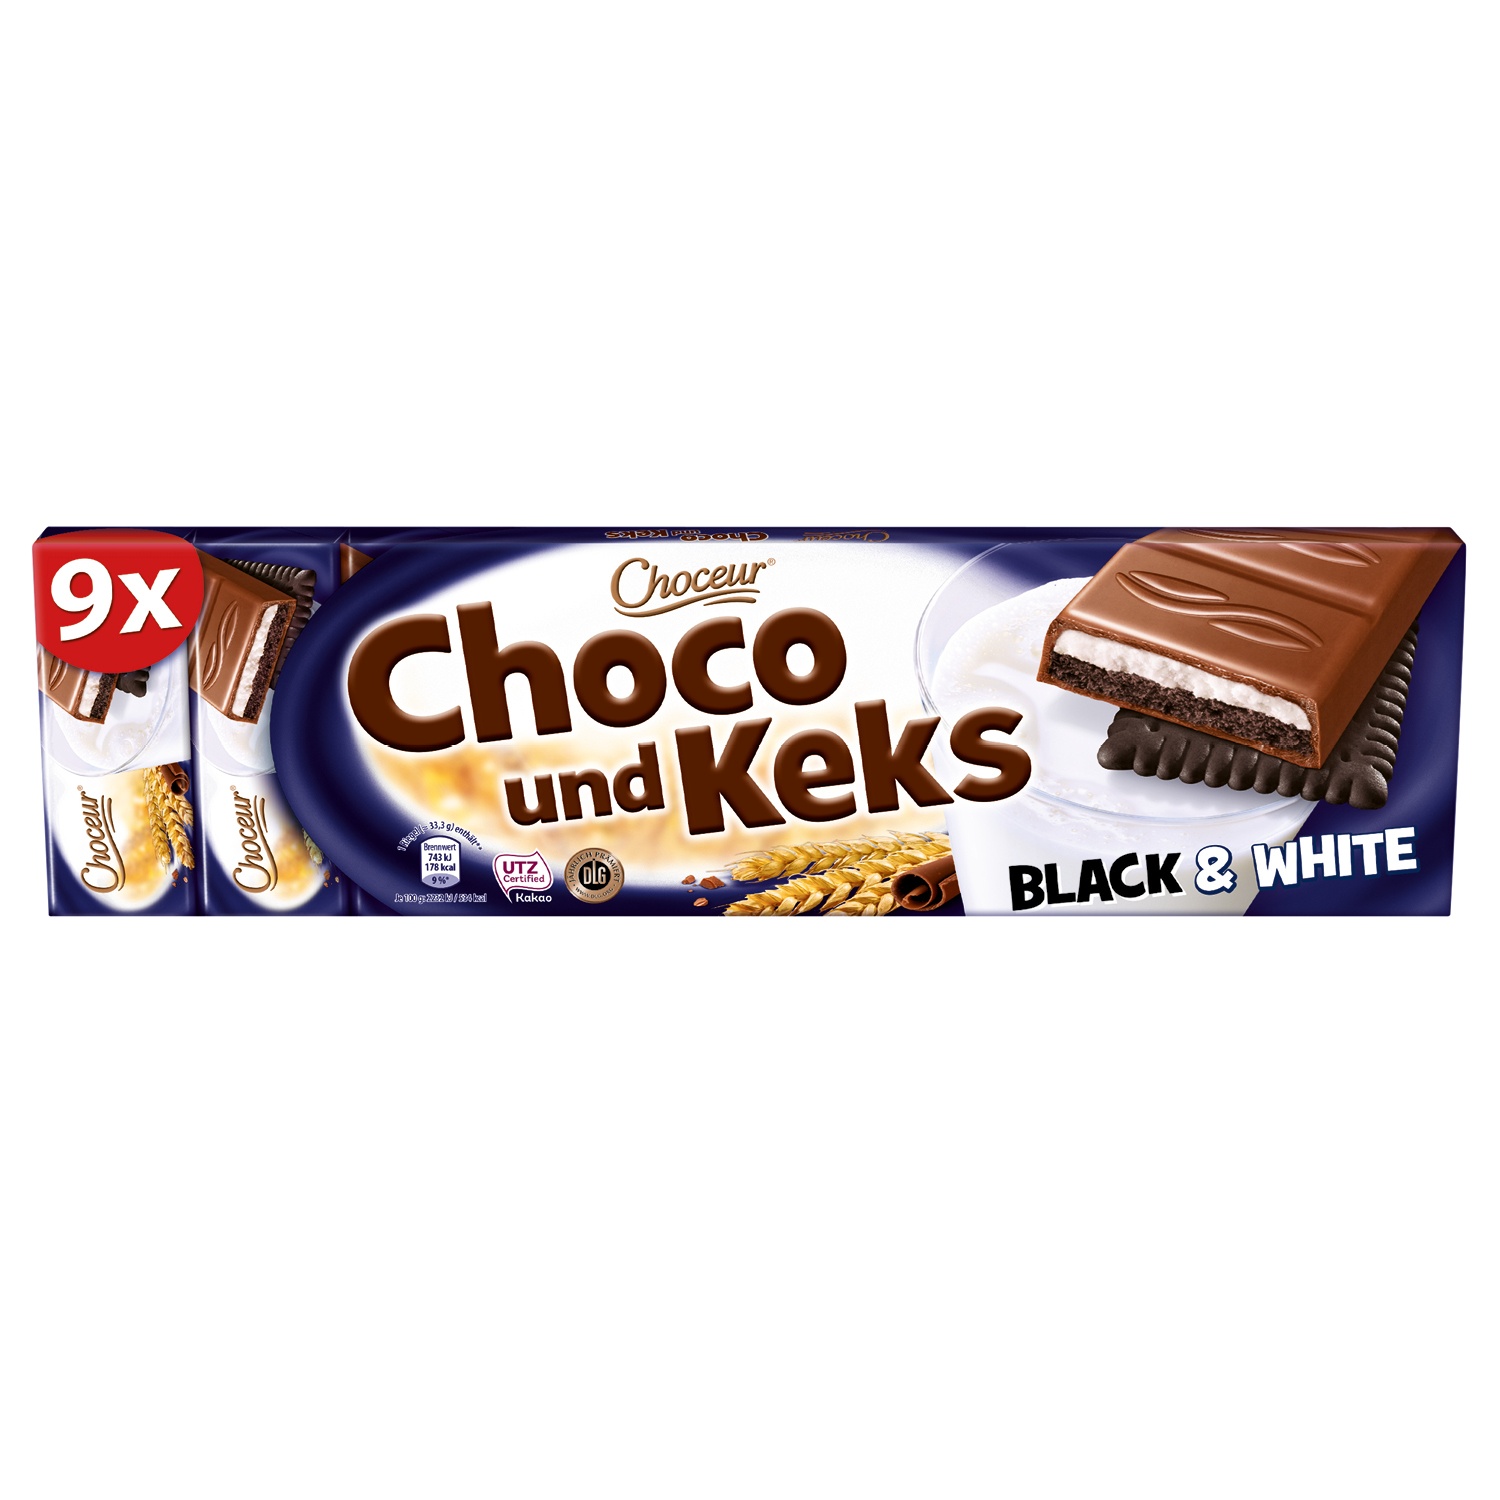 Choceur Choco und Keks 300g